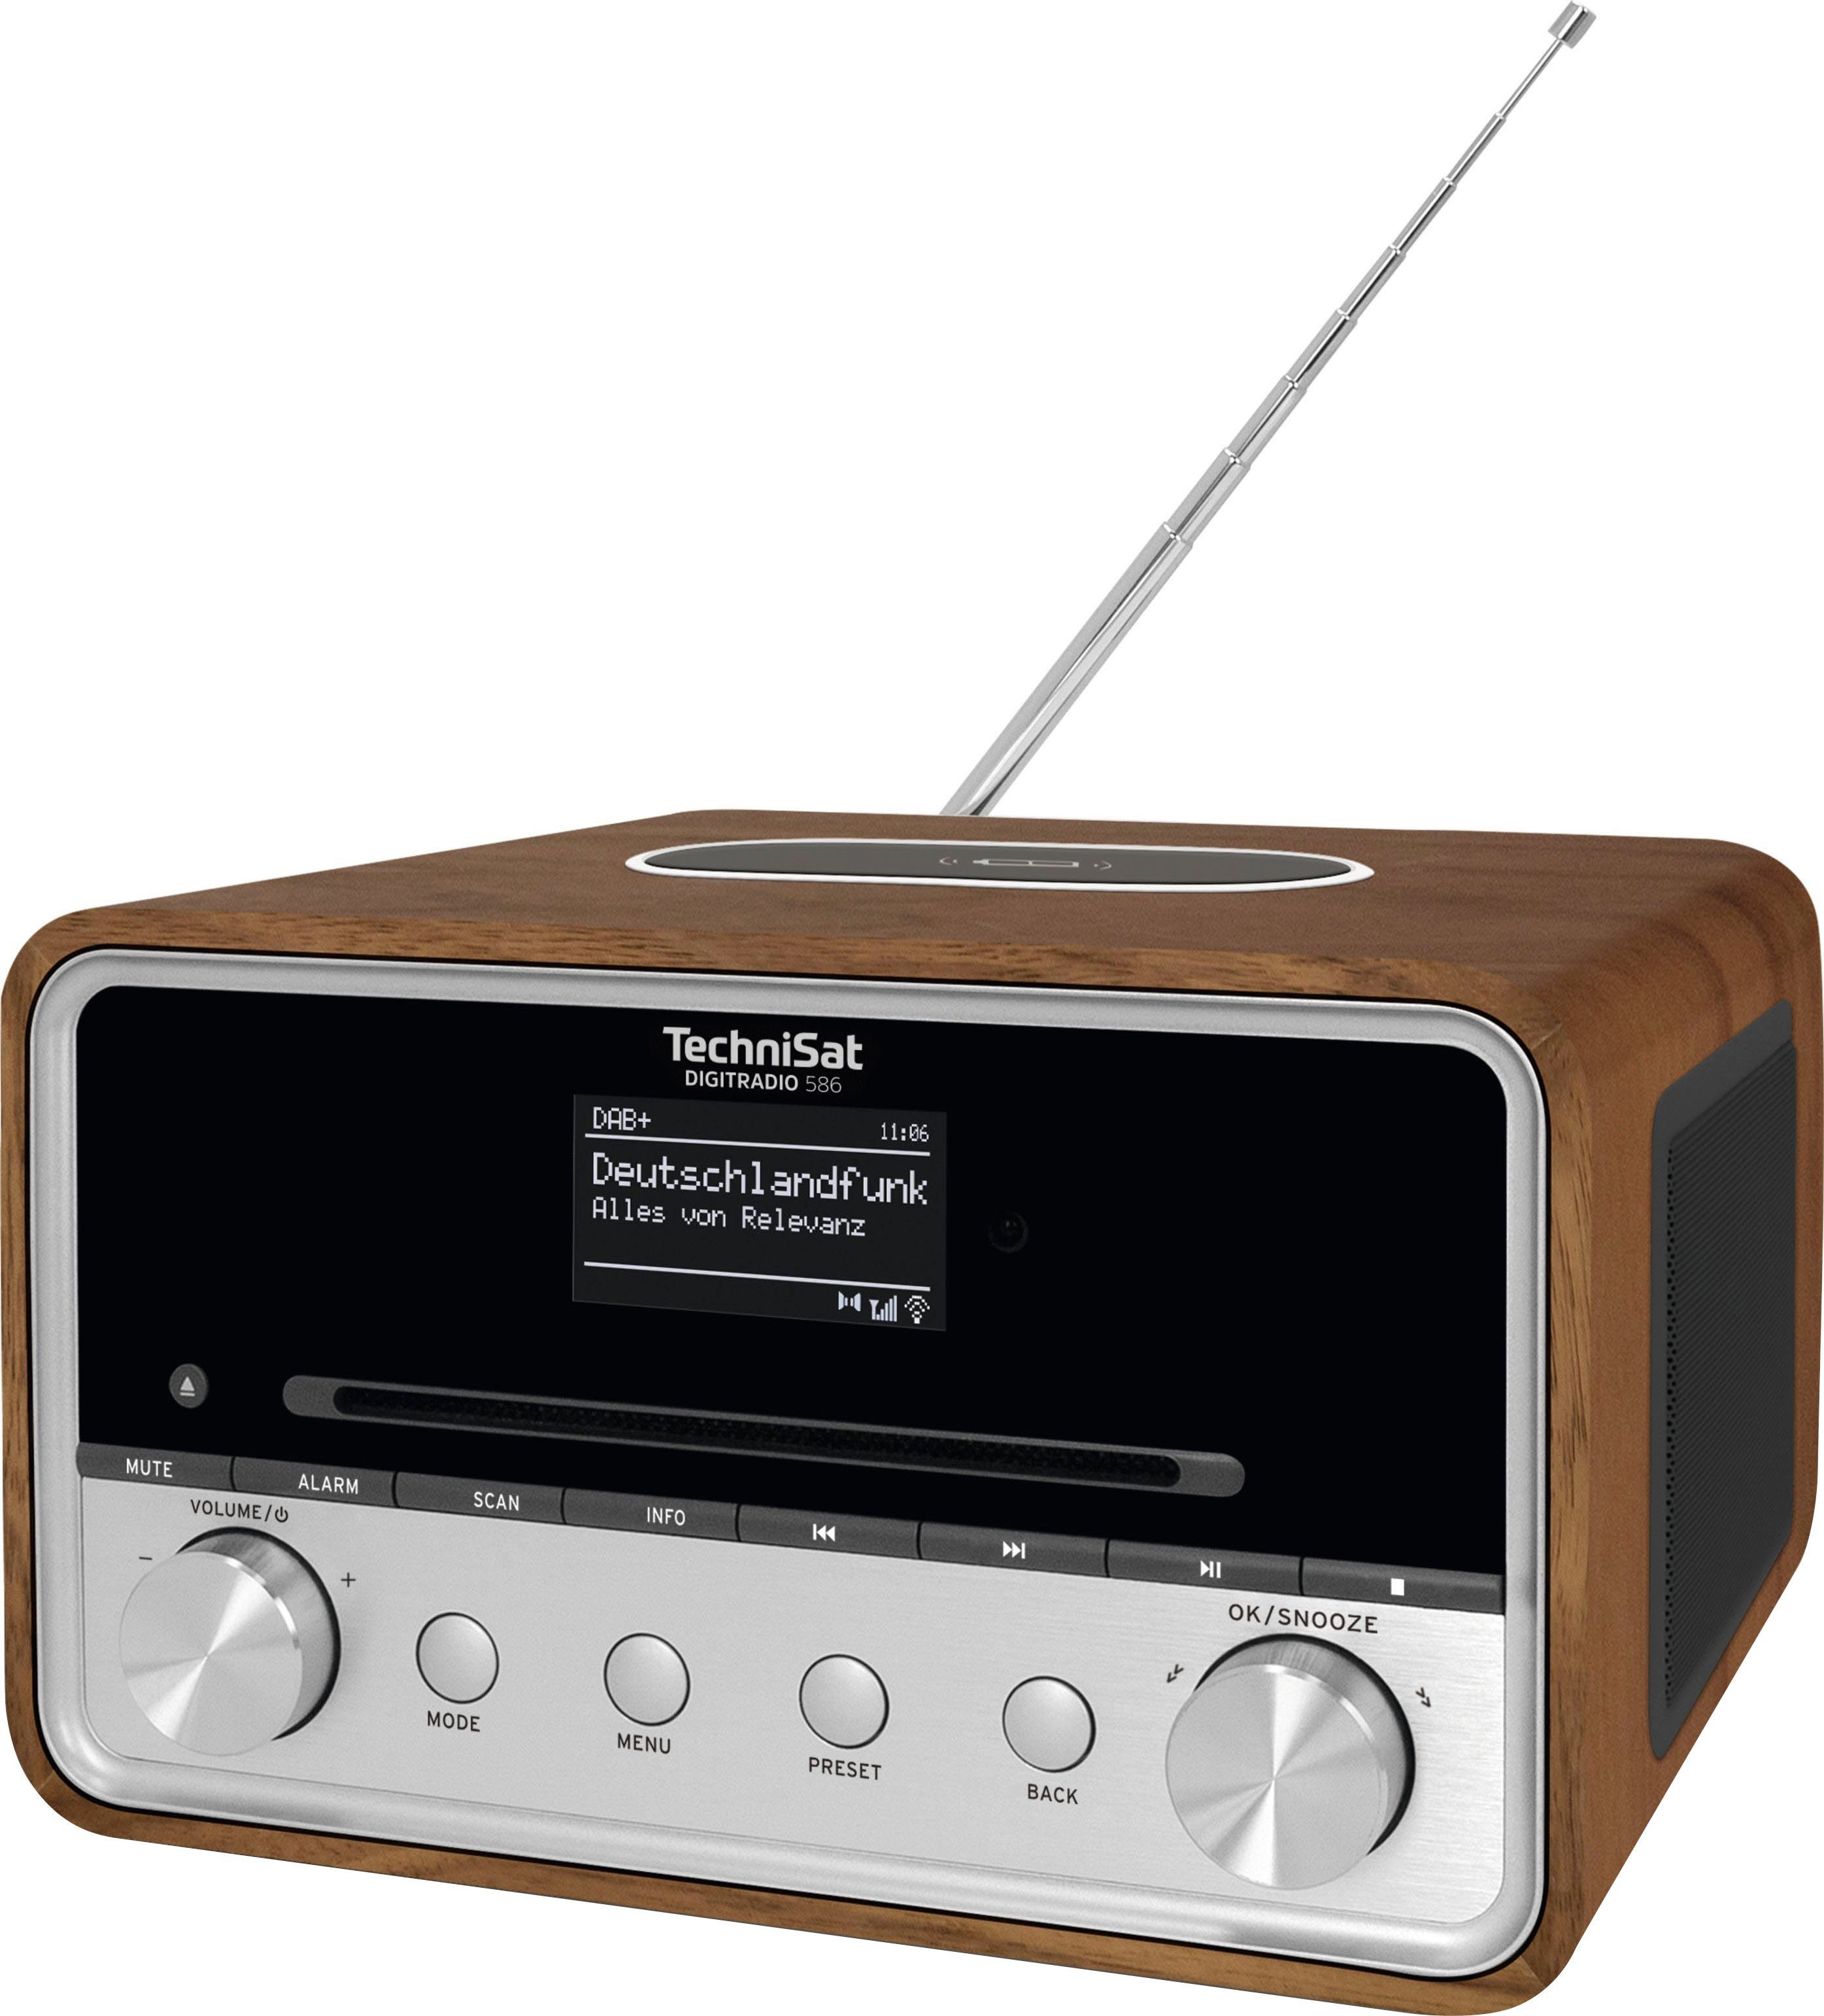 586 Internetradio, W) TechniSat (DAB), Nussbaum RDS, mit 20 DIGITRADIO UKW Radio (Digitalradio